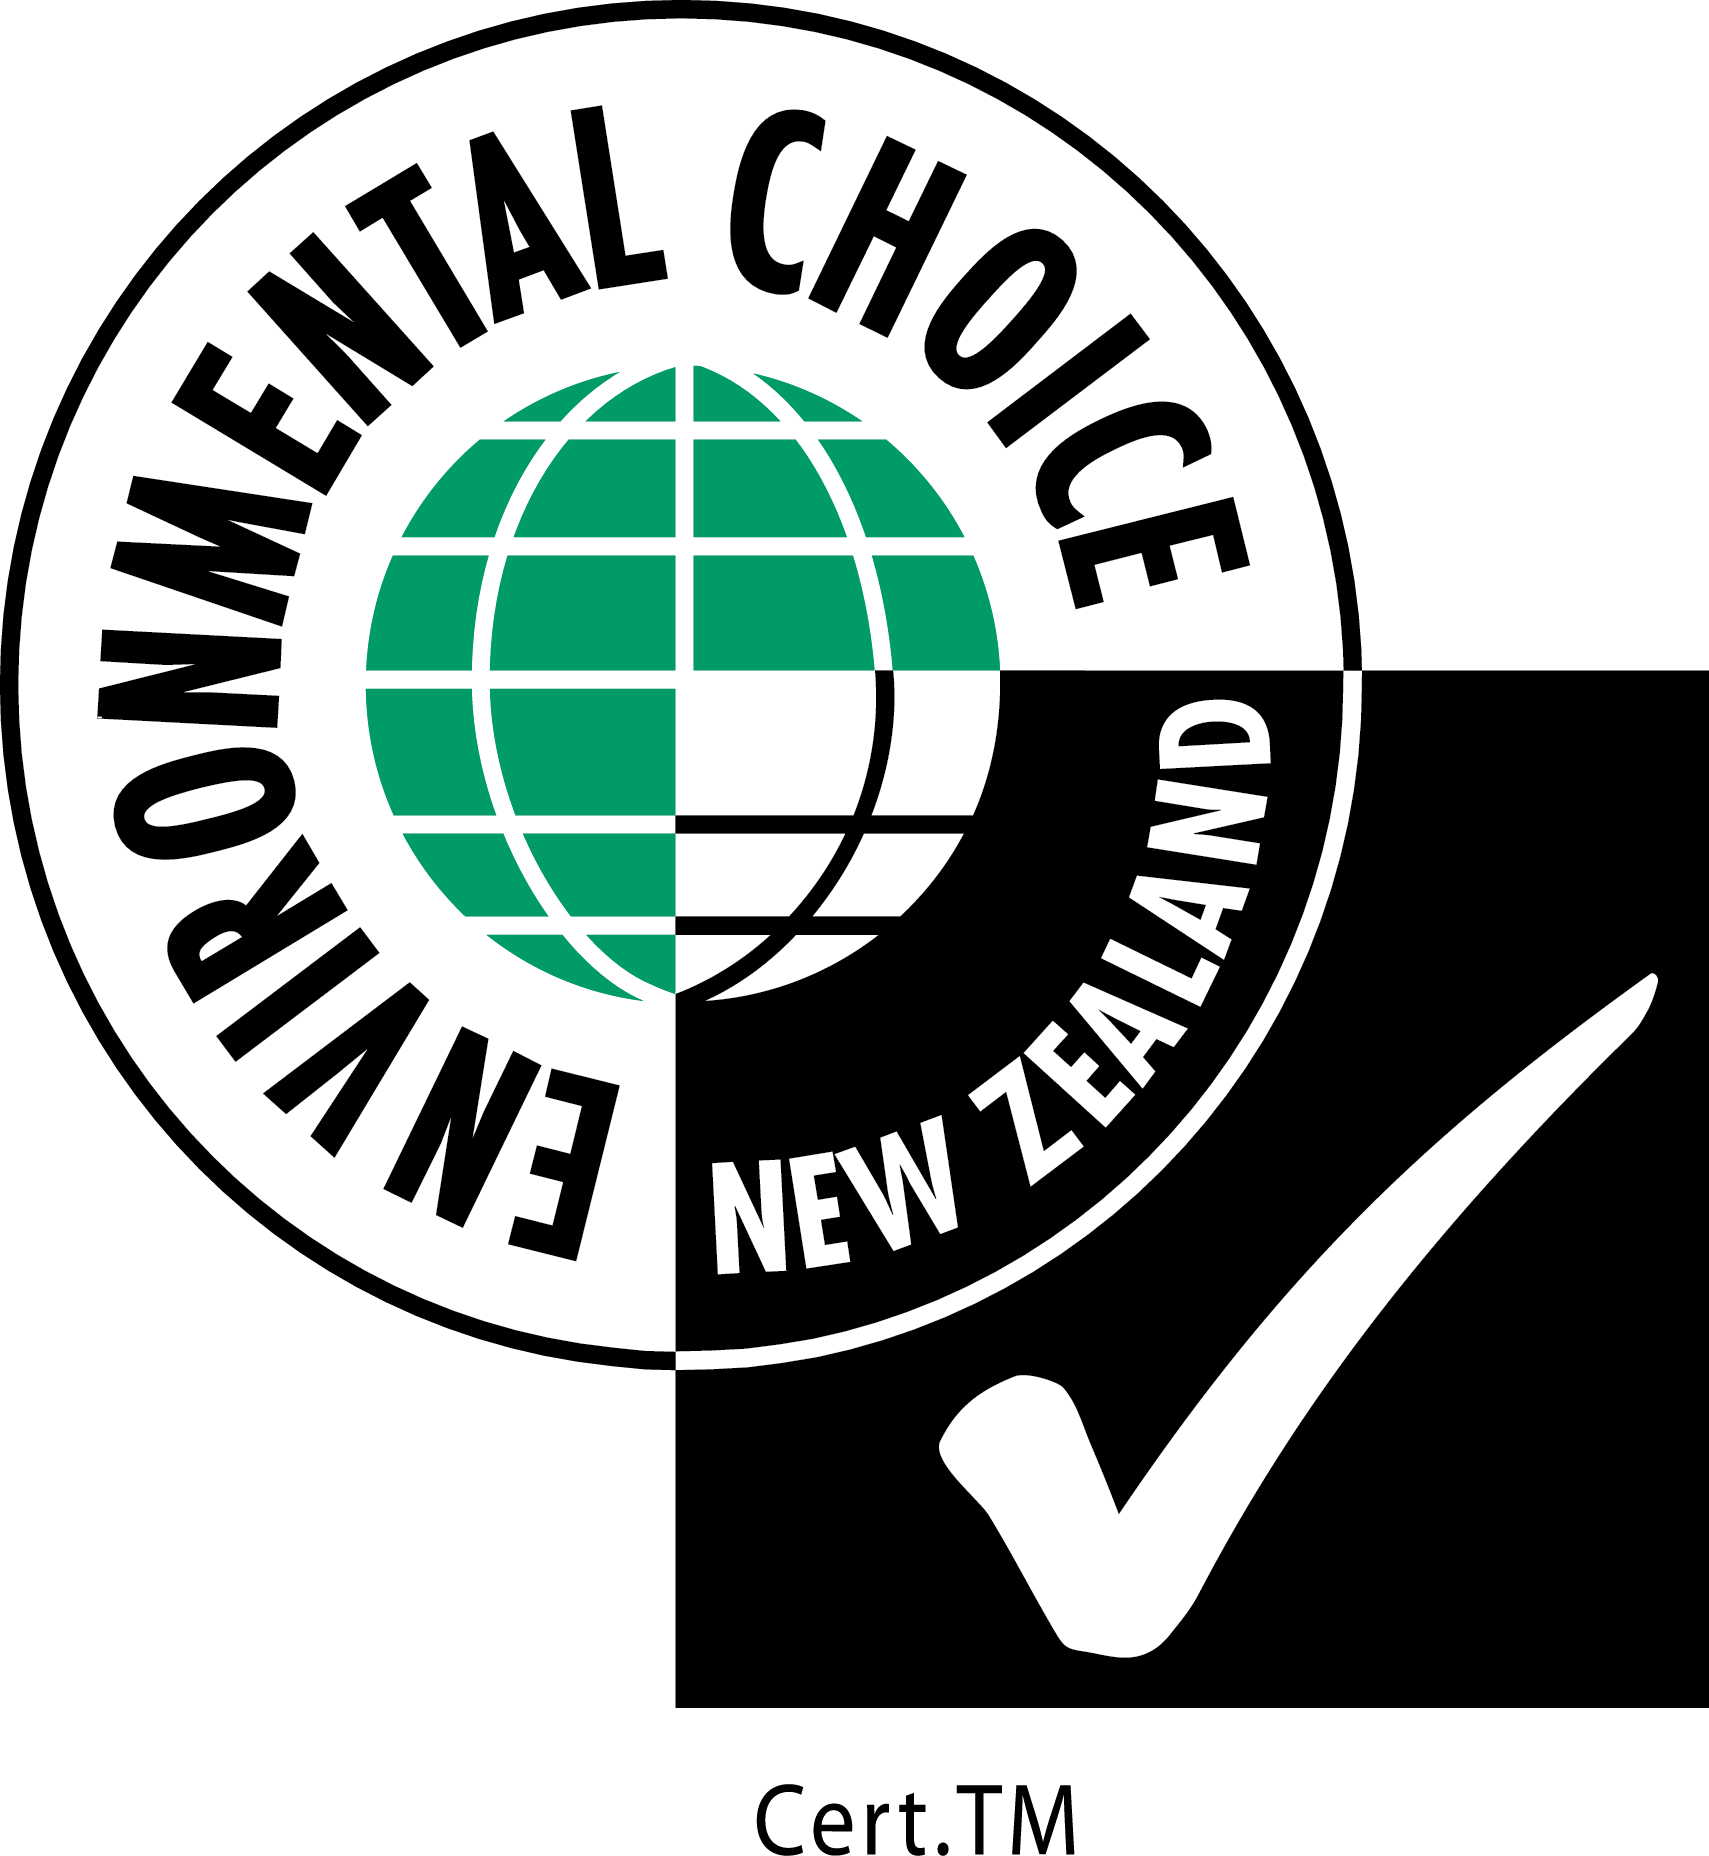 enviro choice logo